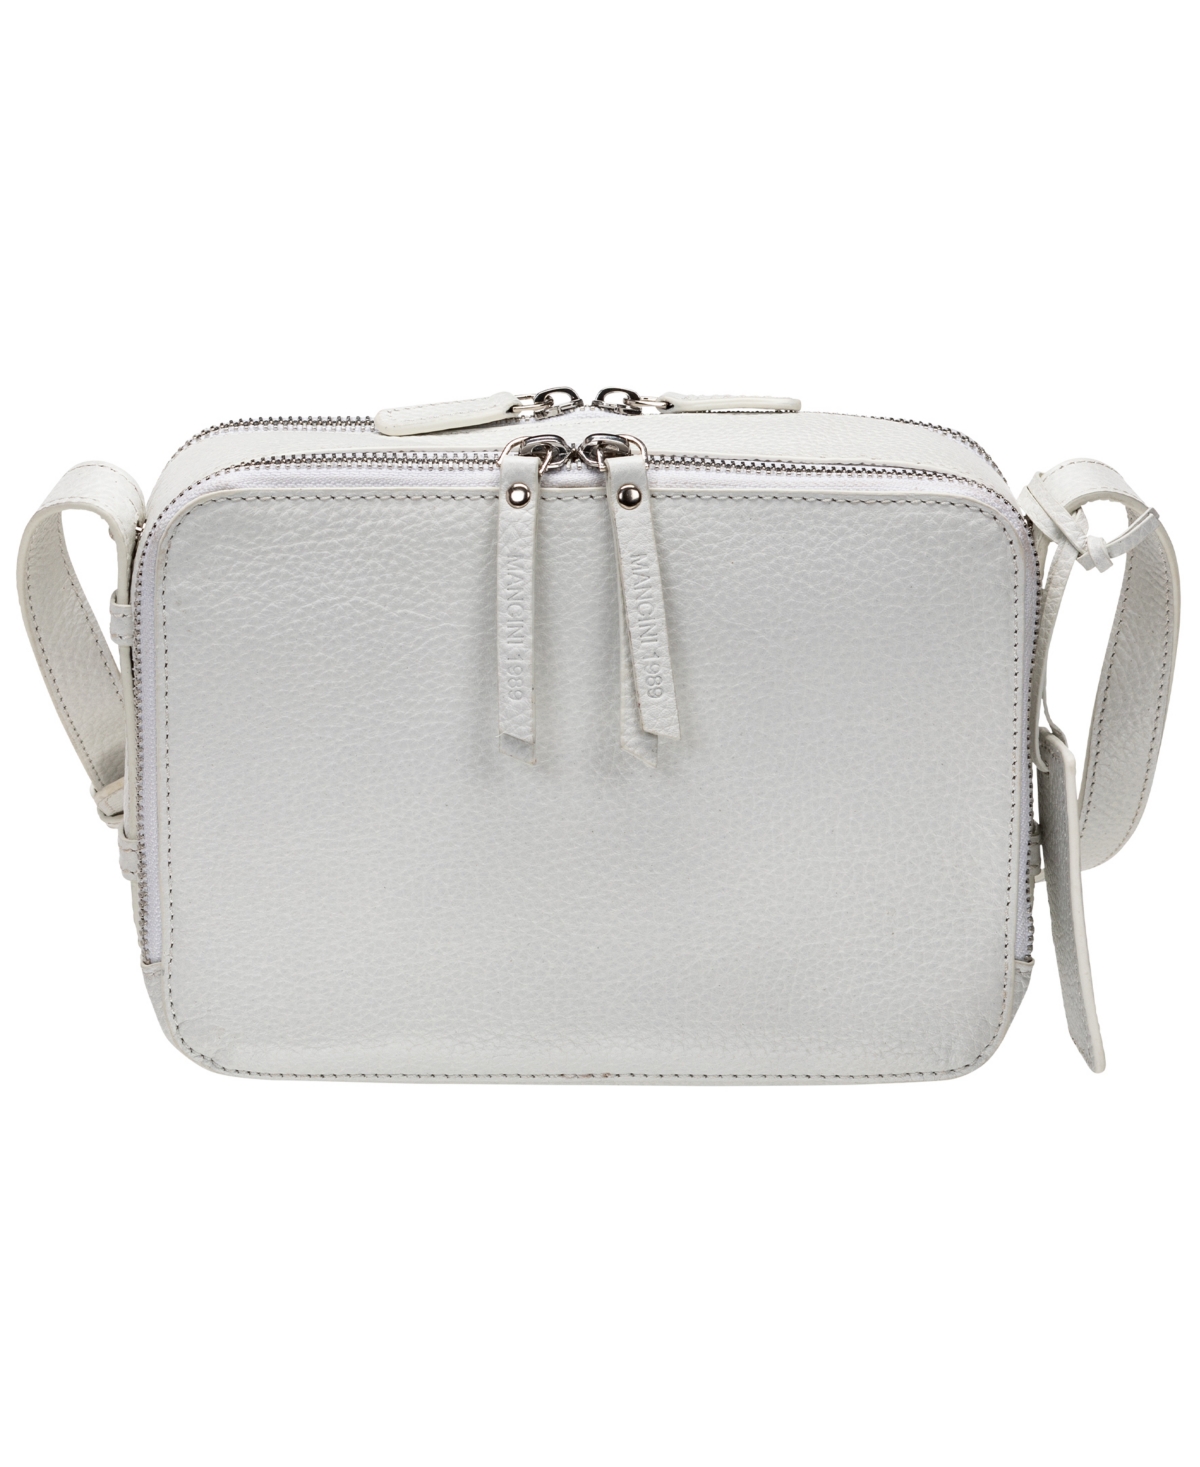 Women's Pebbled Rachel Camera Style Crossbody Handbag - White